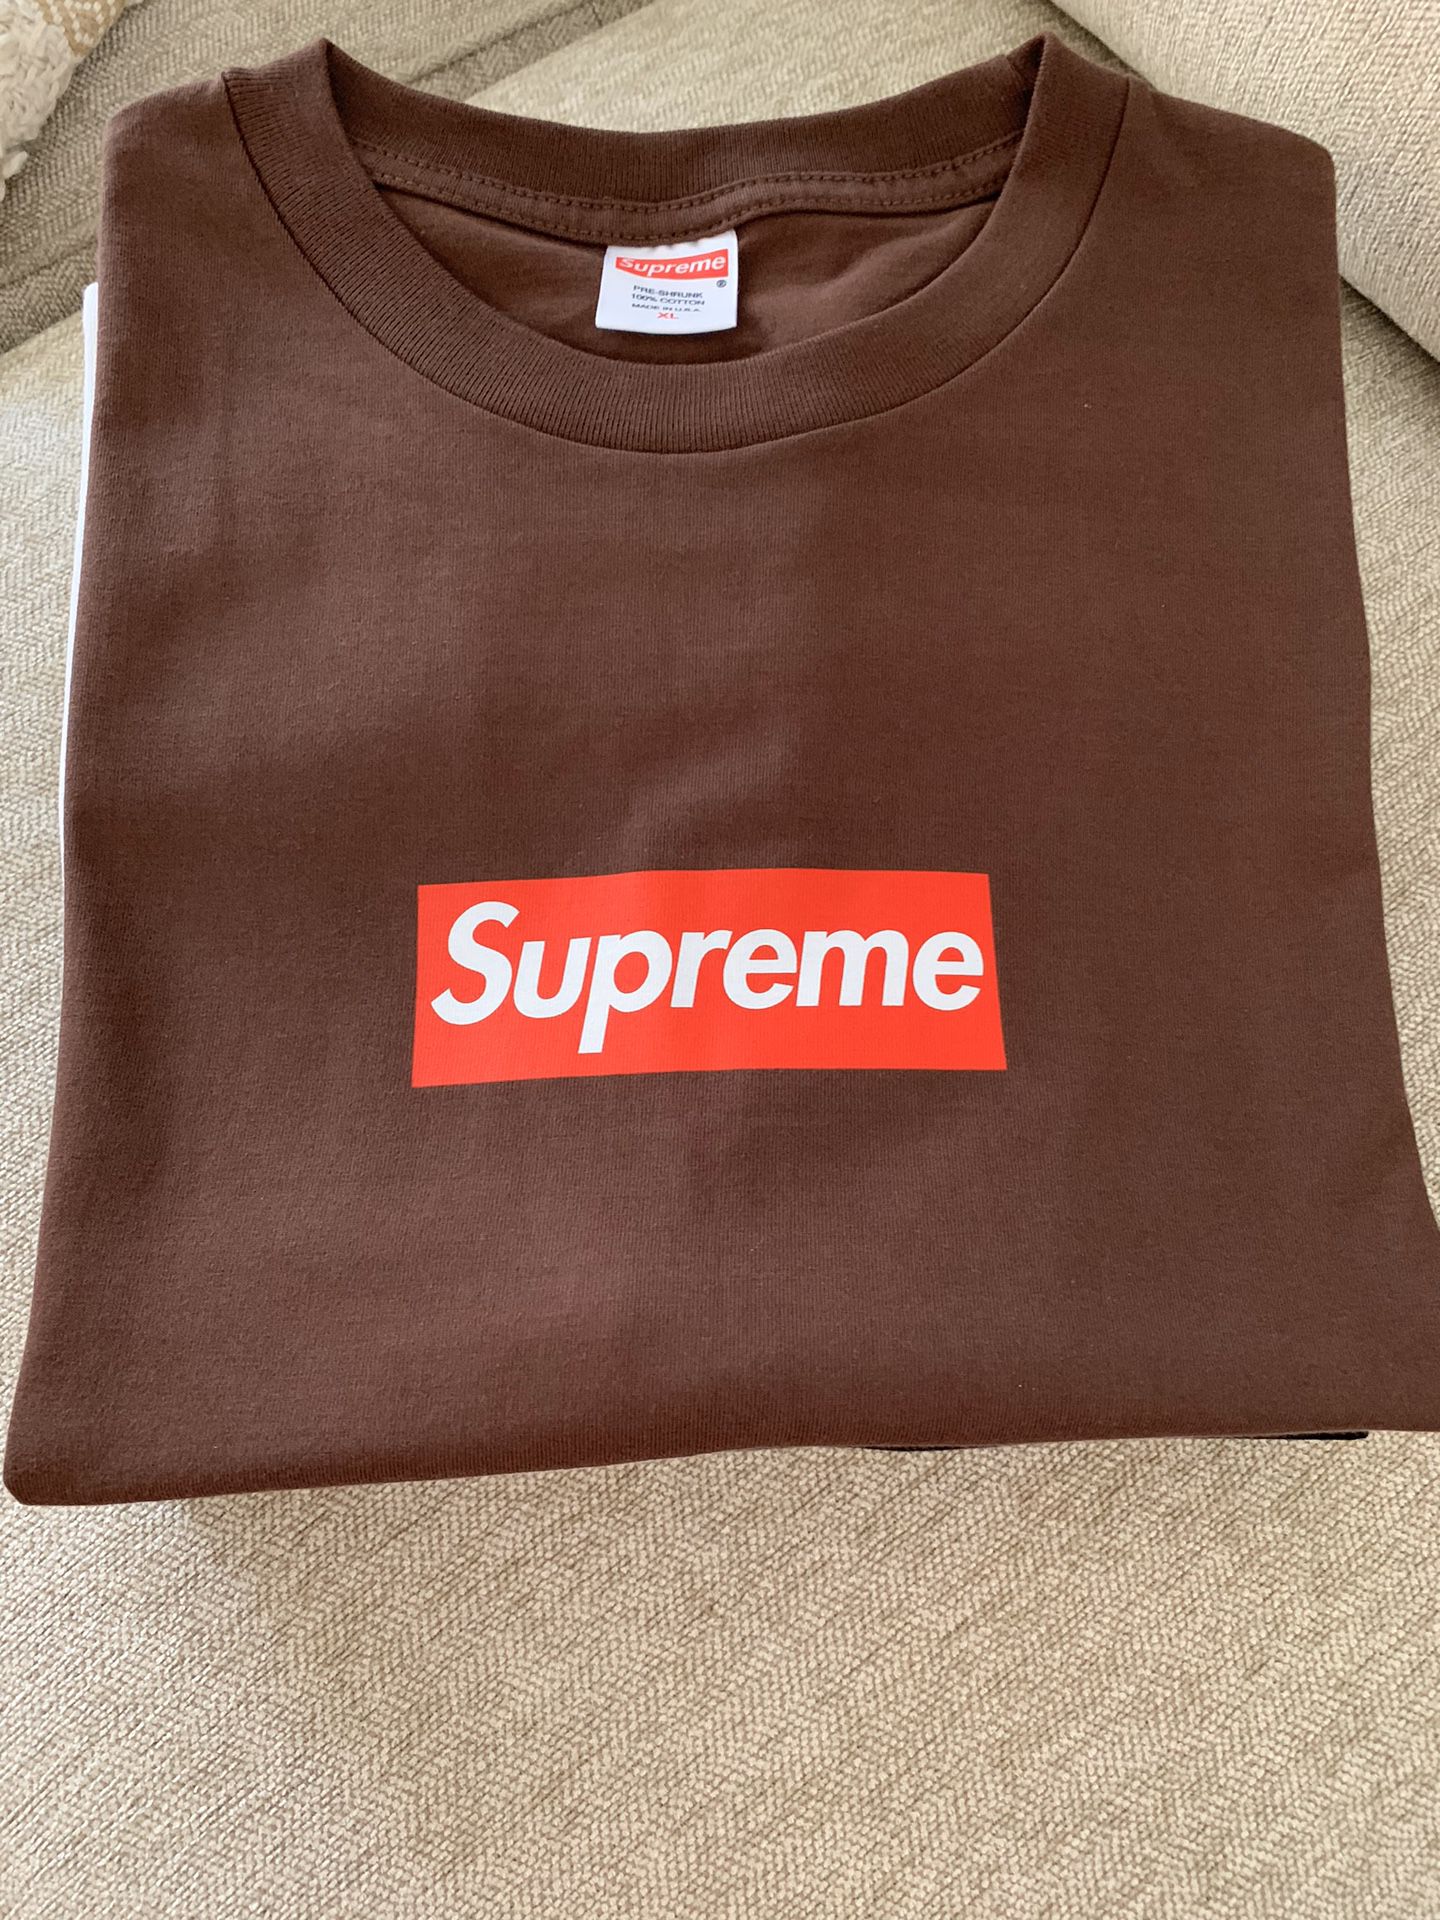 NEW Supreme 25th Anniversary Box Logo T-Shirt - XL/L